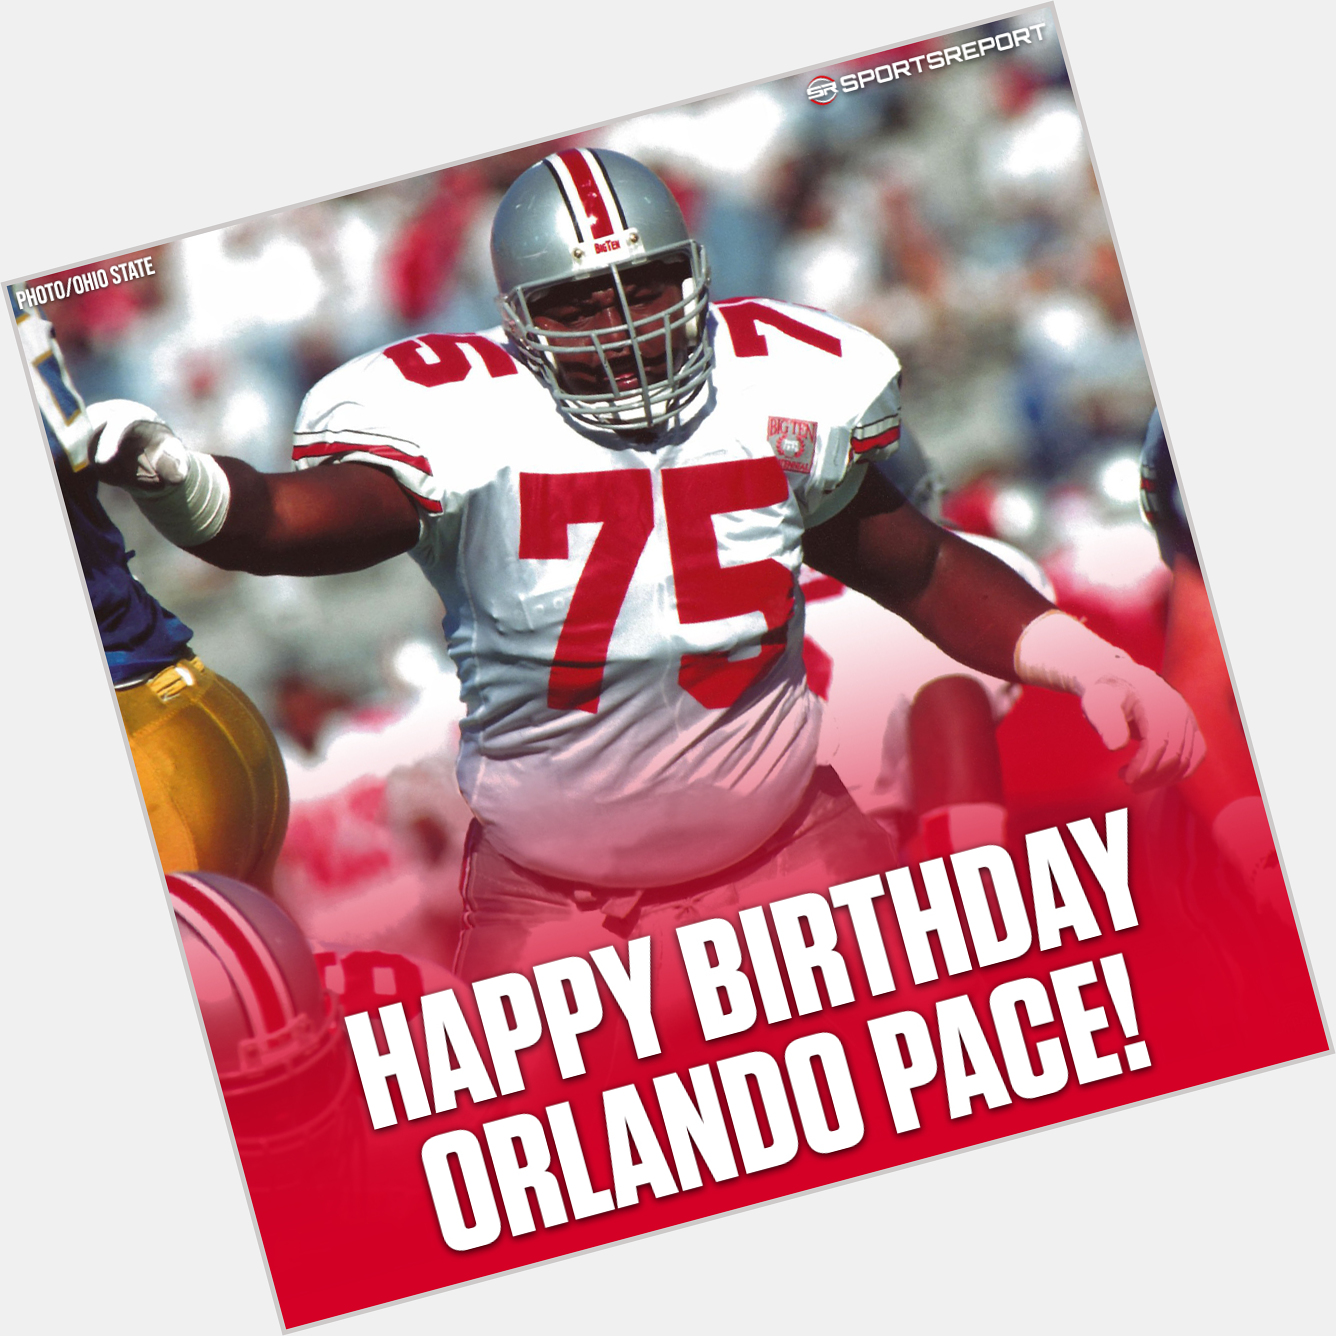 Happy Birthday to Legend, Orlando Pace! 